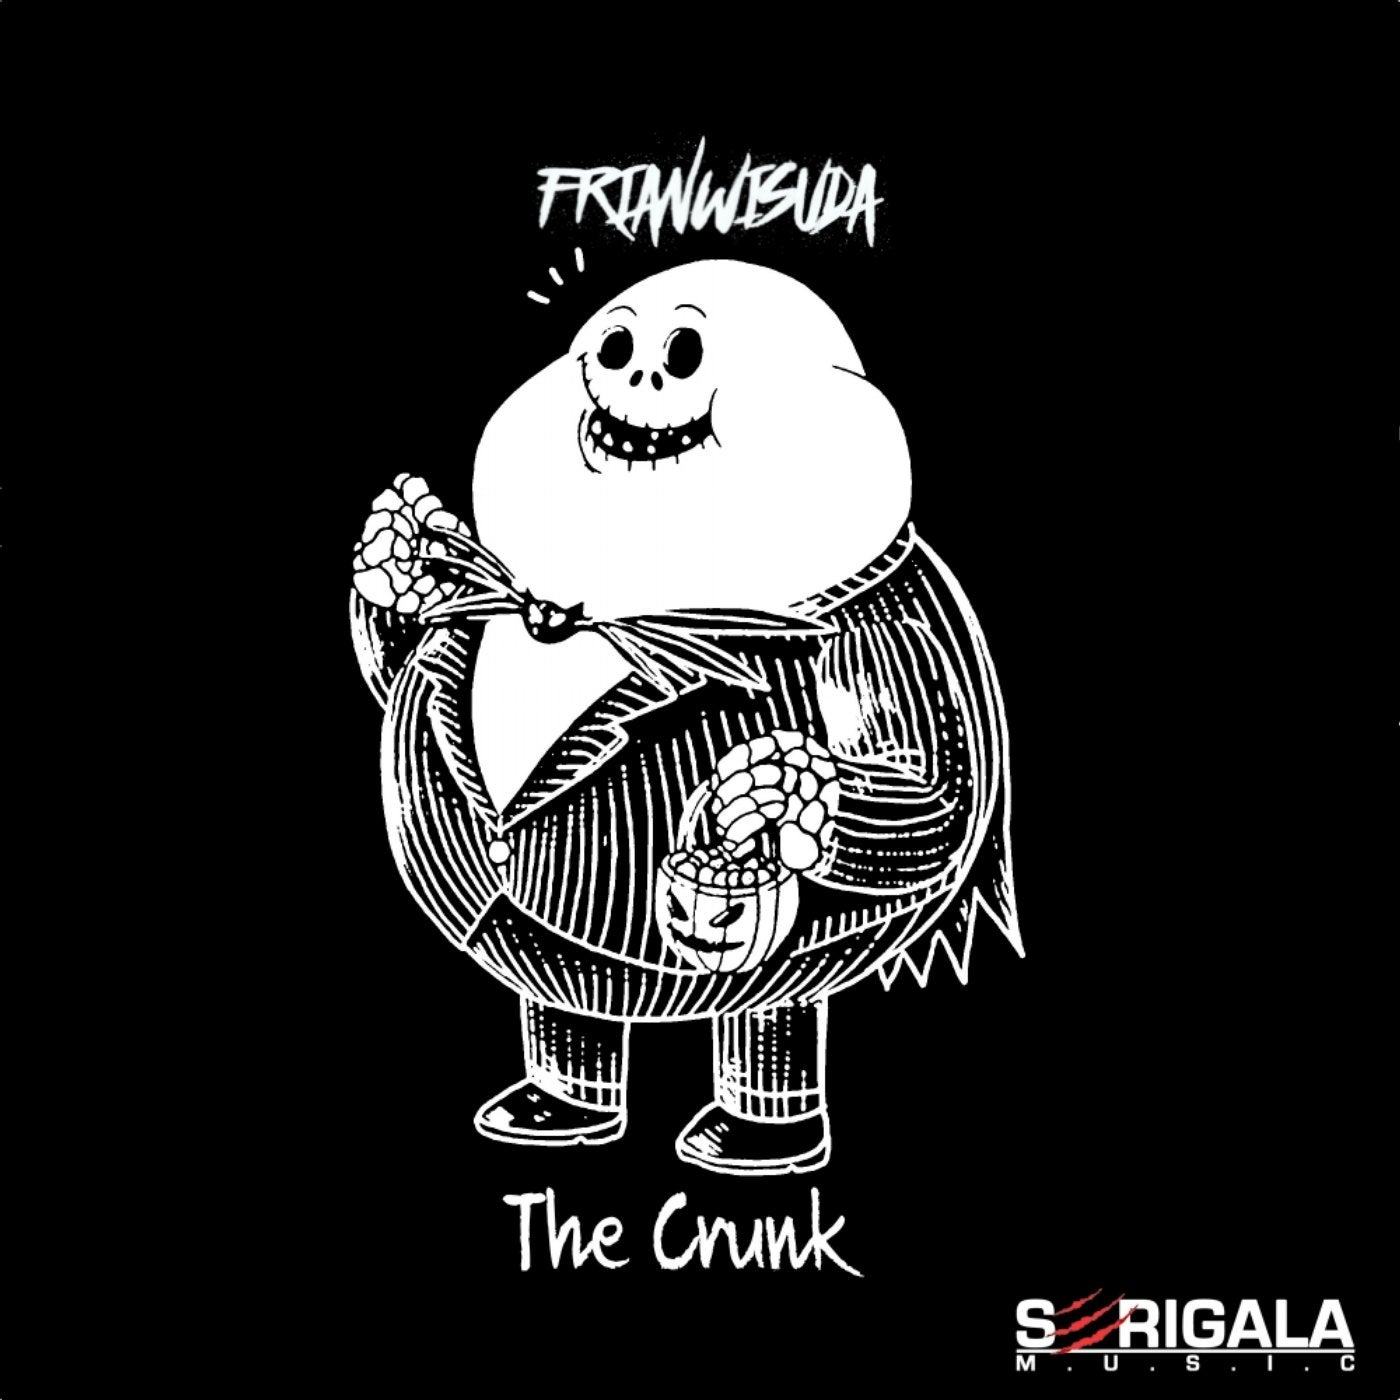 The Crunk